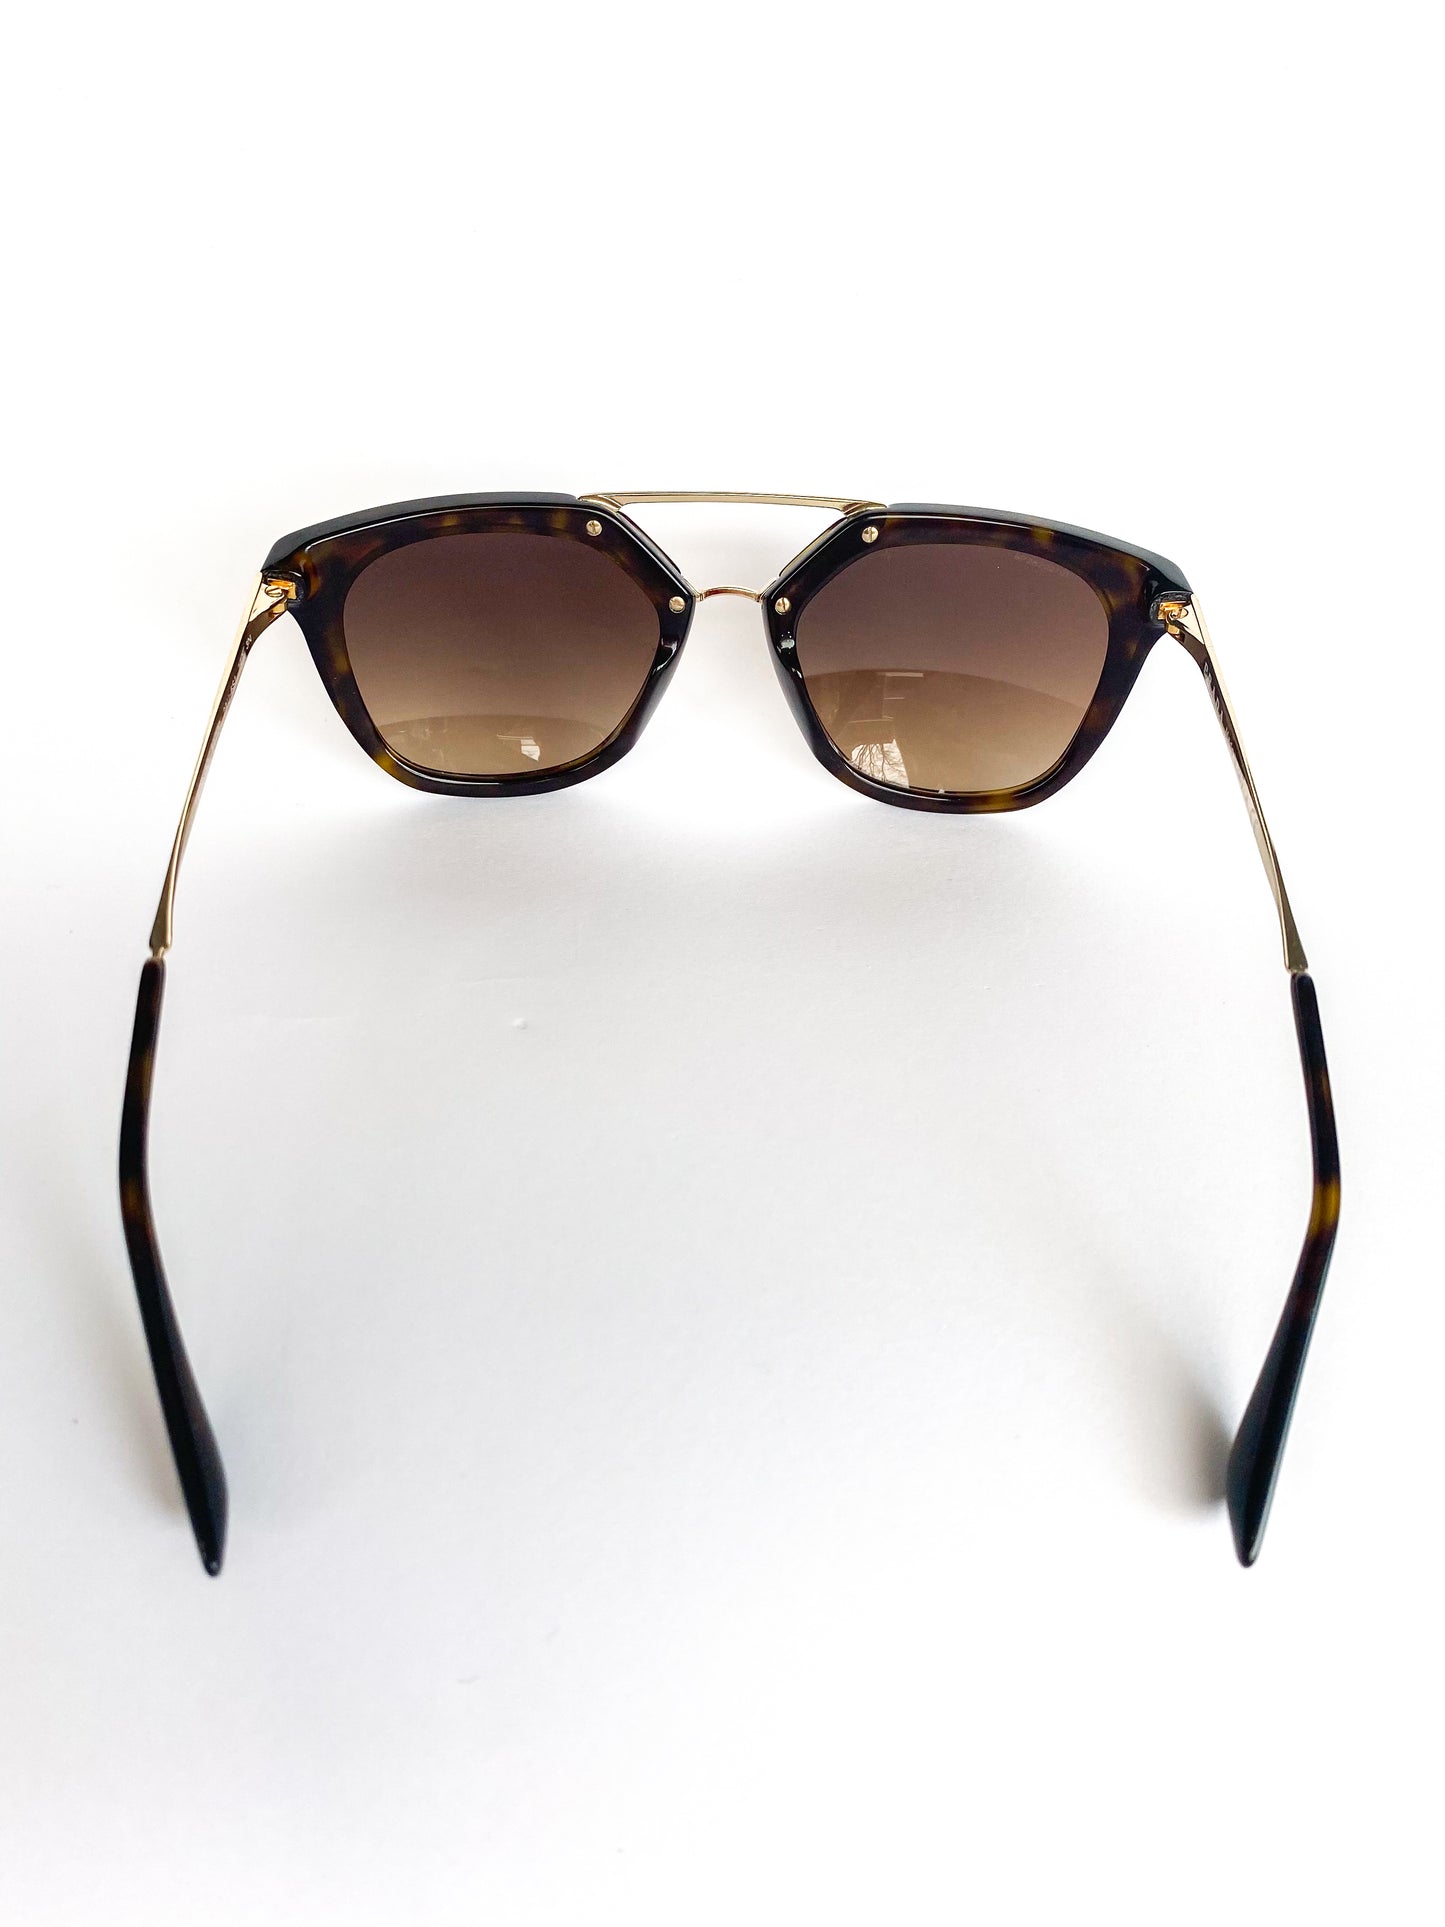 Prada Catwalk Tortoise Sunglasses